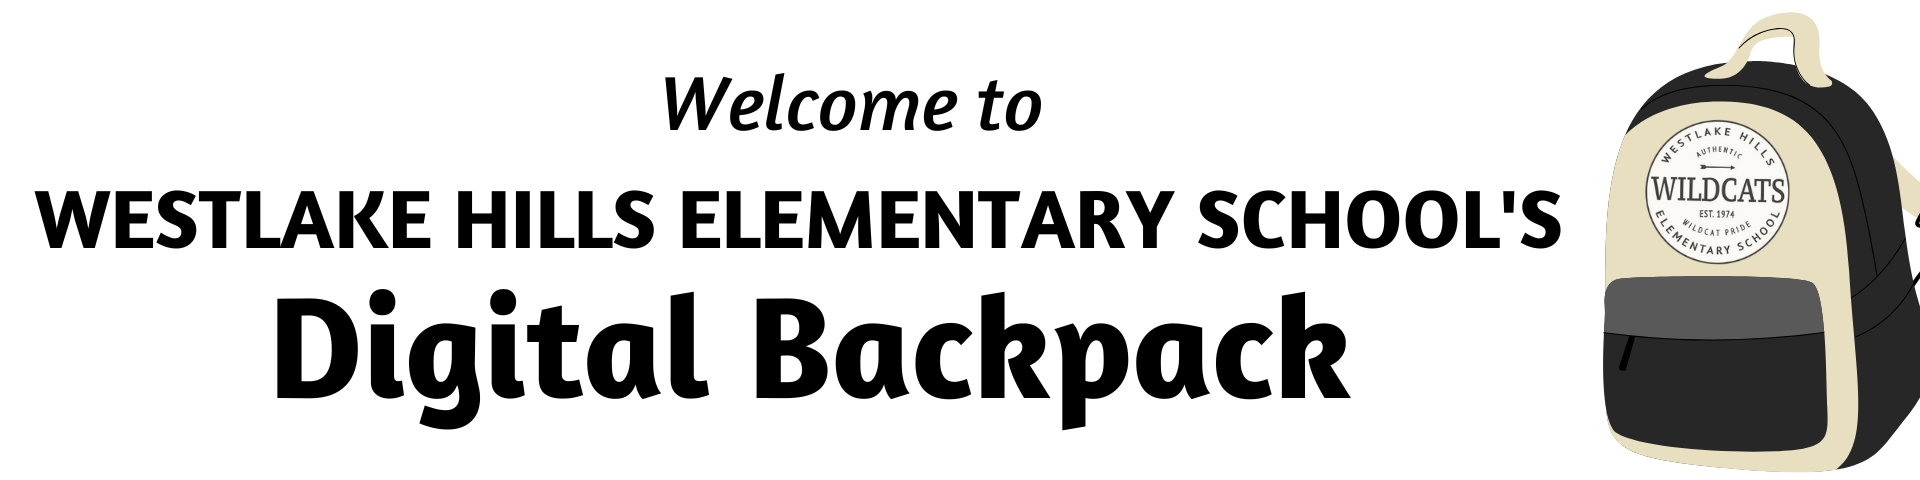 Welcome to Westlake Hills Elementary School's Digital Backpack